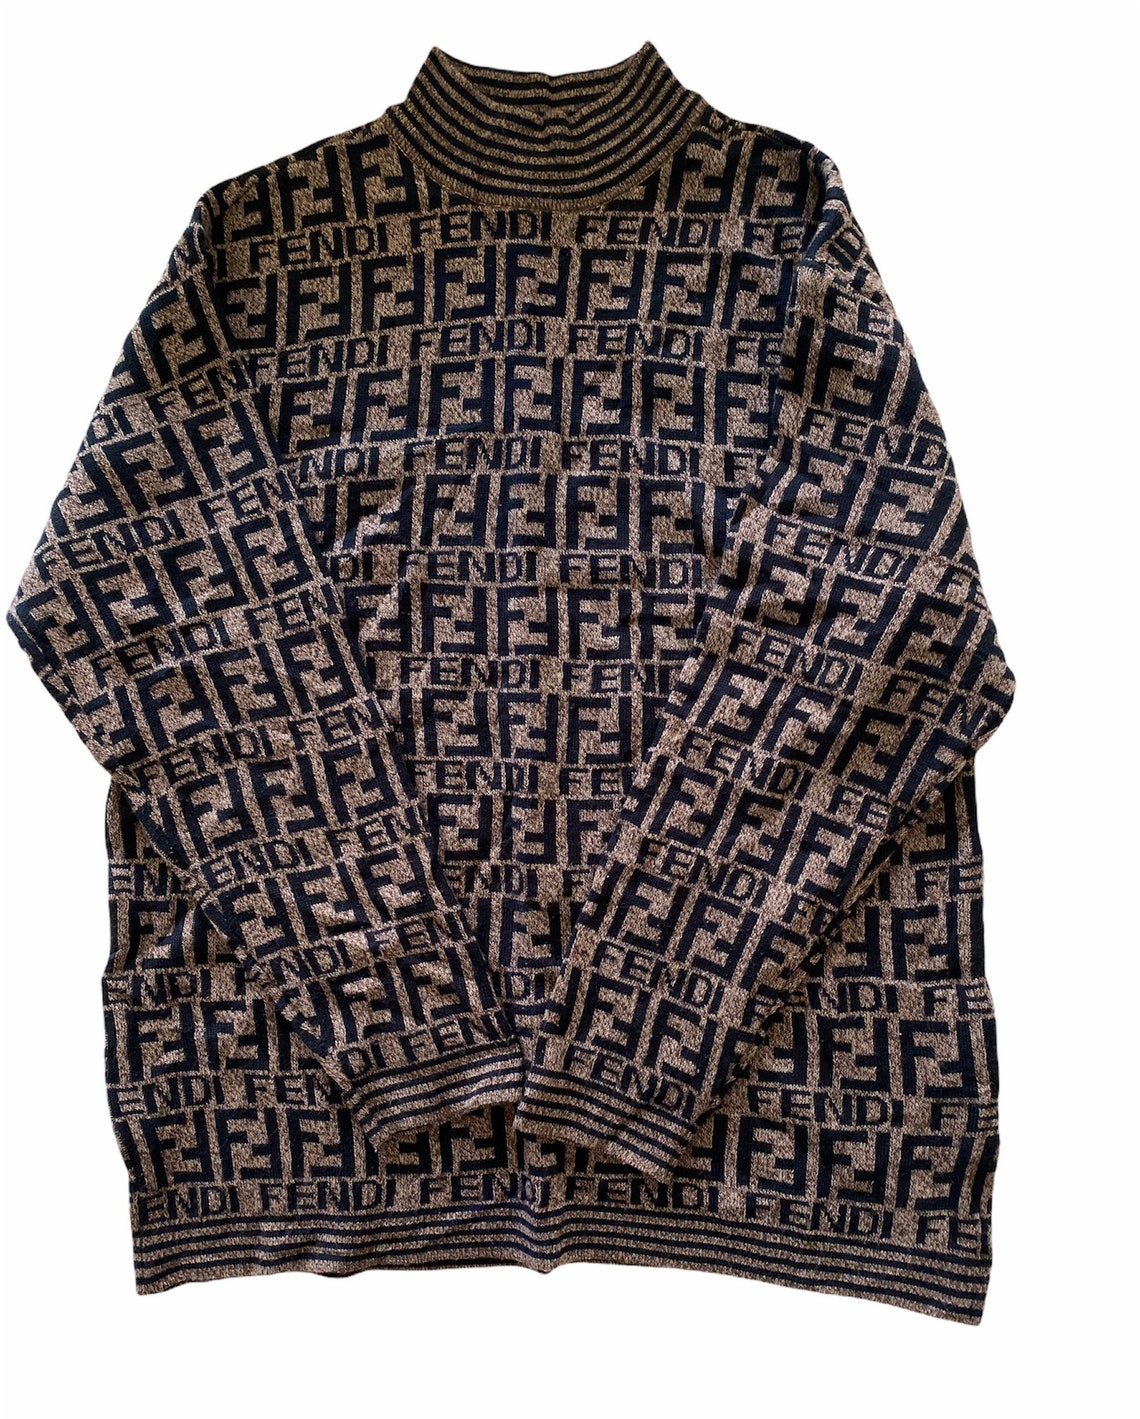 Vintage Fendi Zucca Knit Sweaters | Etsy